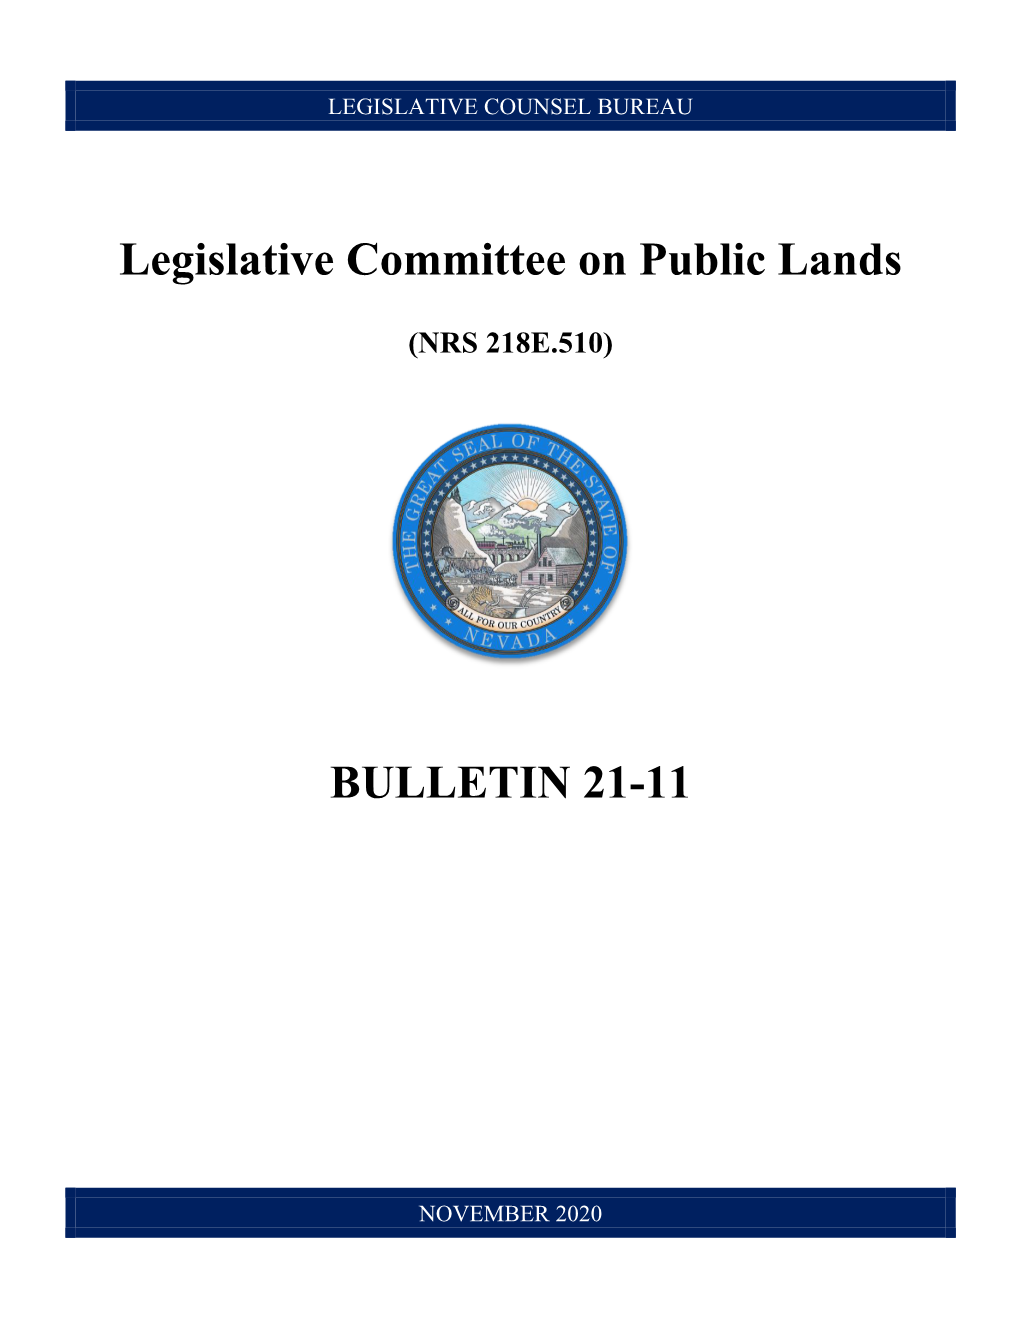 Legislative Committee on Public Lands BULLETIN 21-11